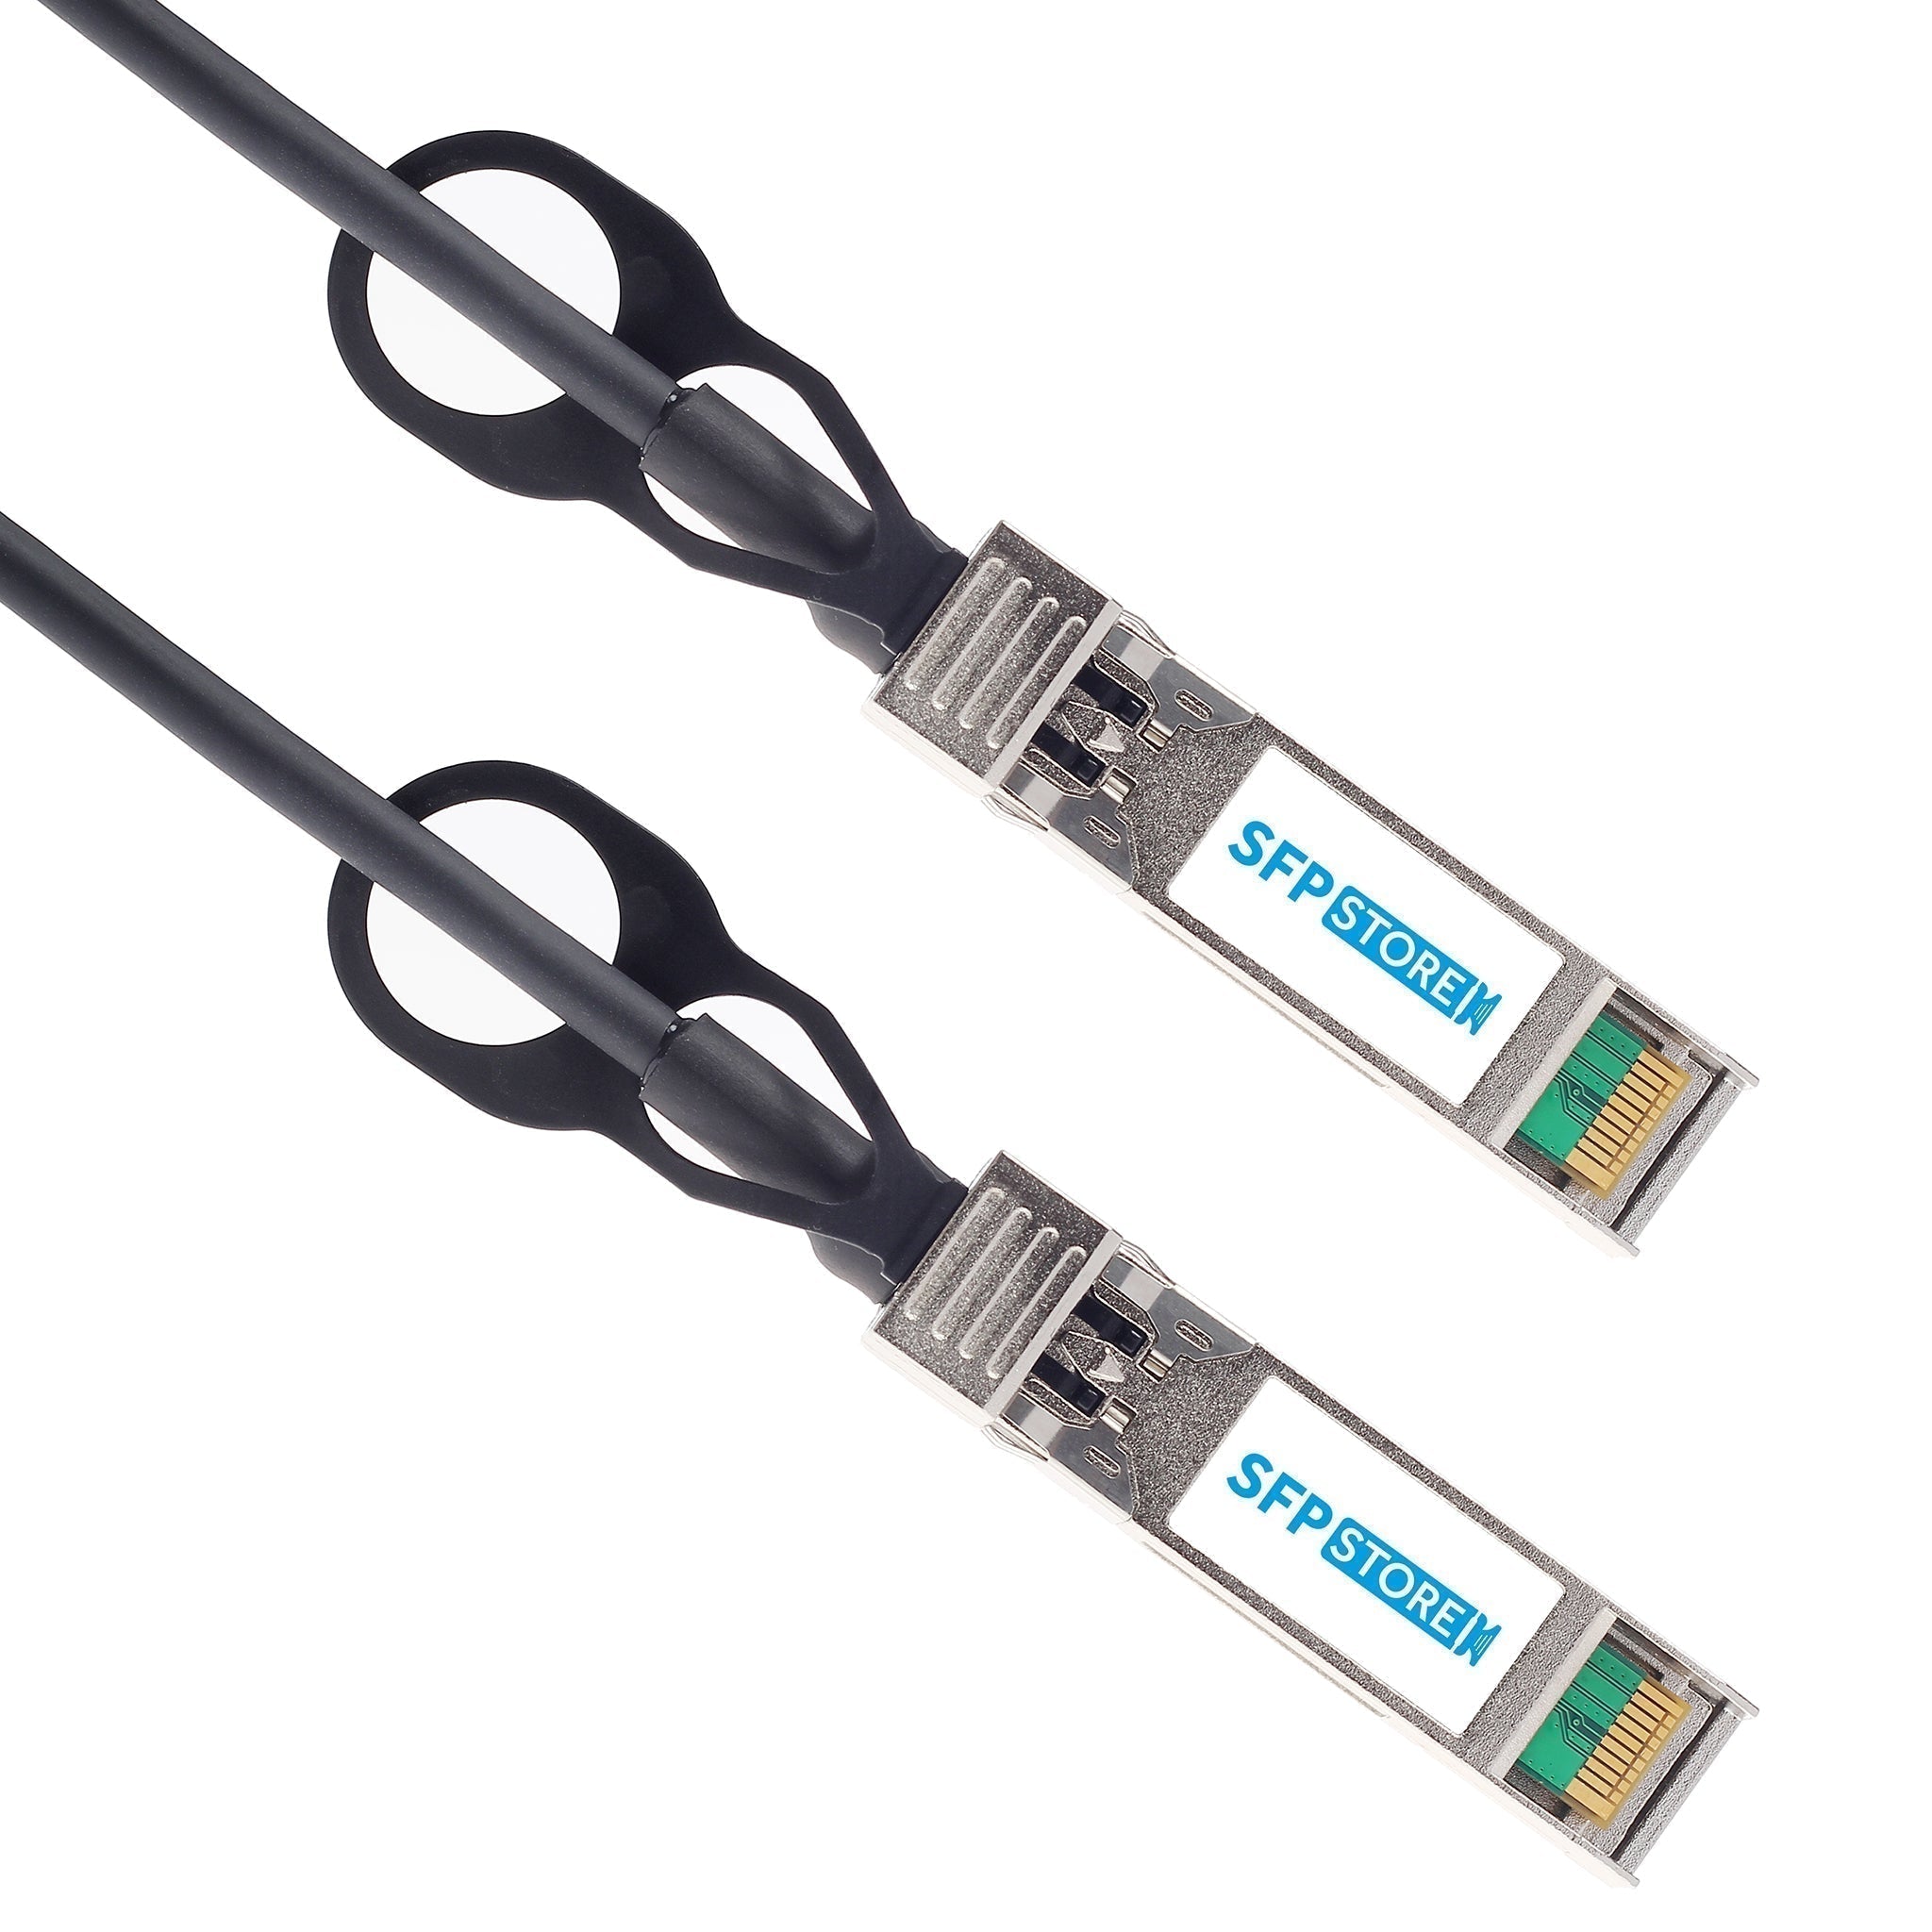 AT-QSFP1CU-C - 1m Allied Telesis Compatible 40G QSFP+ Passive Direct Attach Copper Twinax Cable